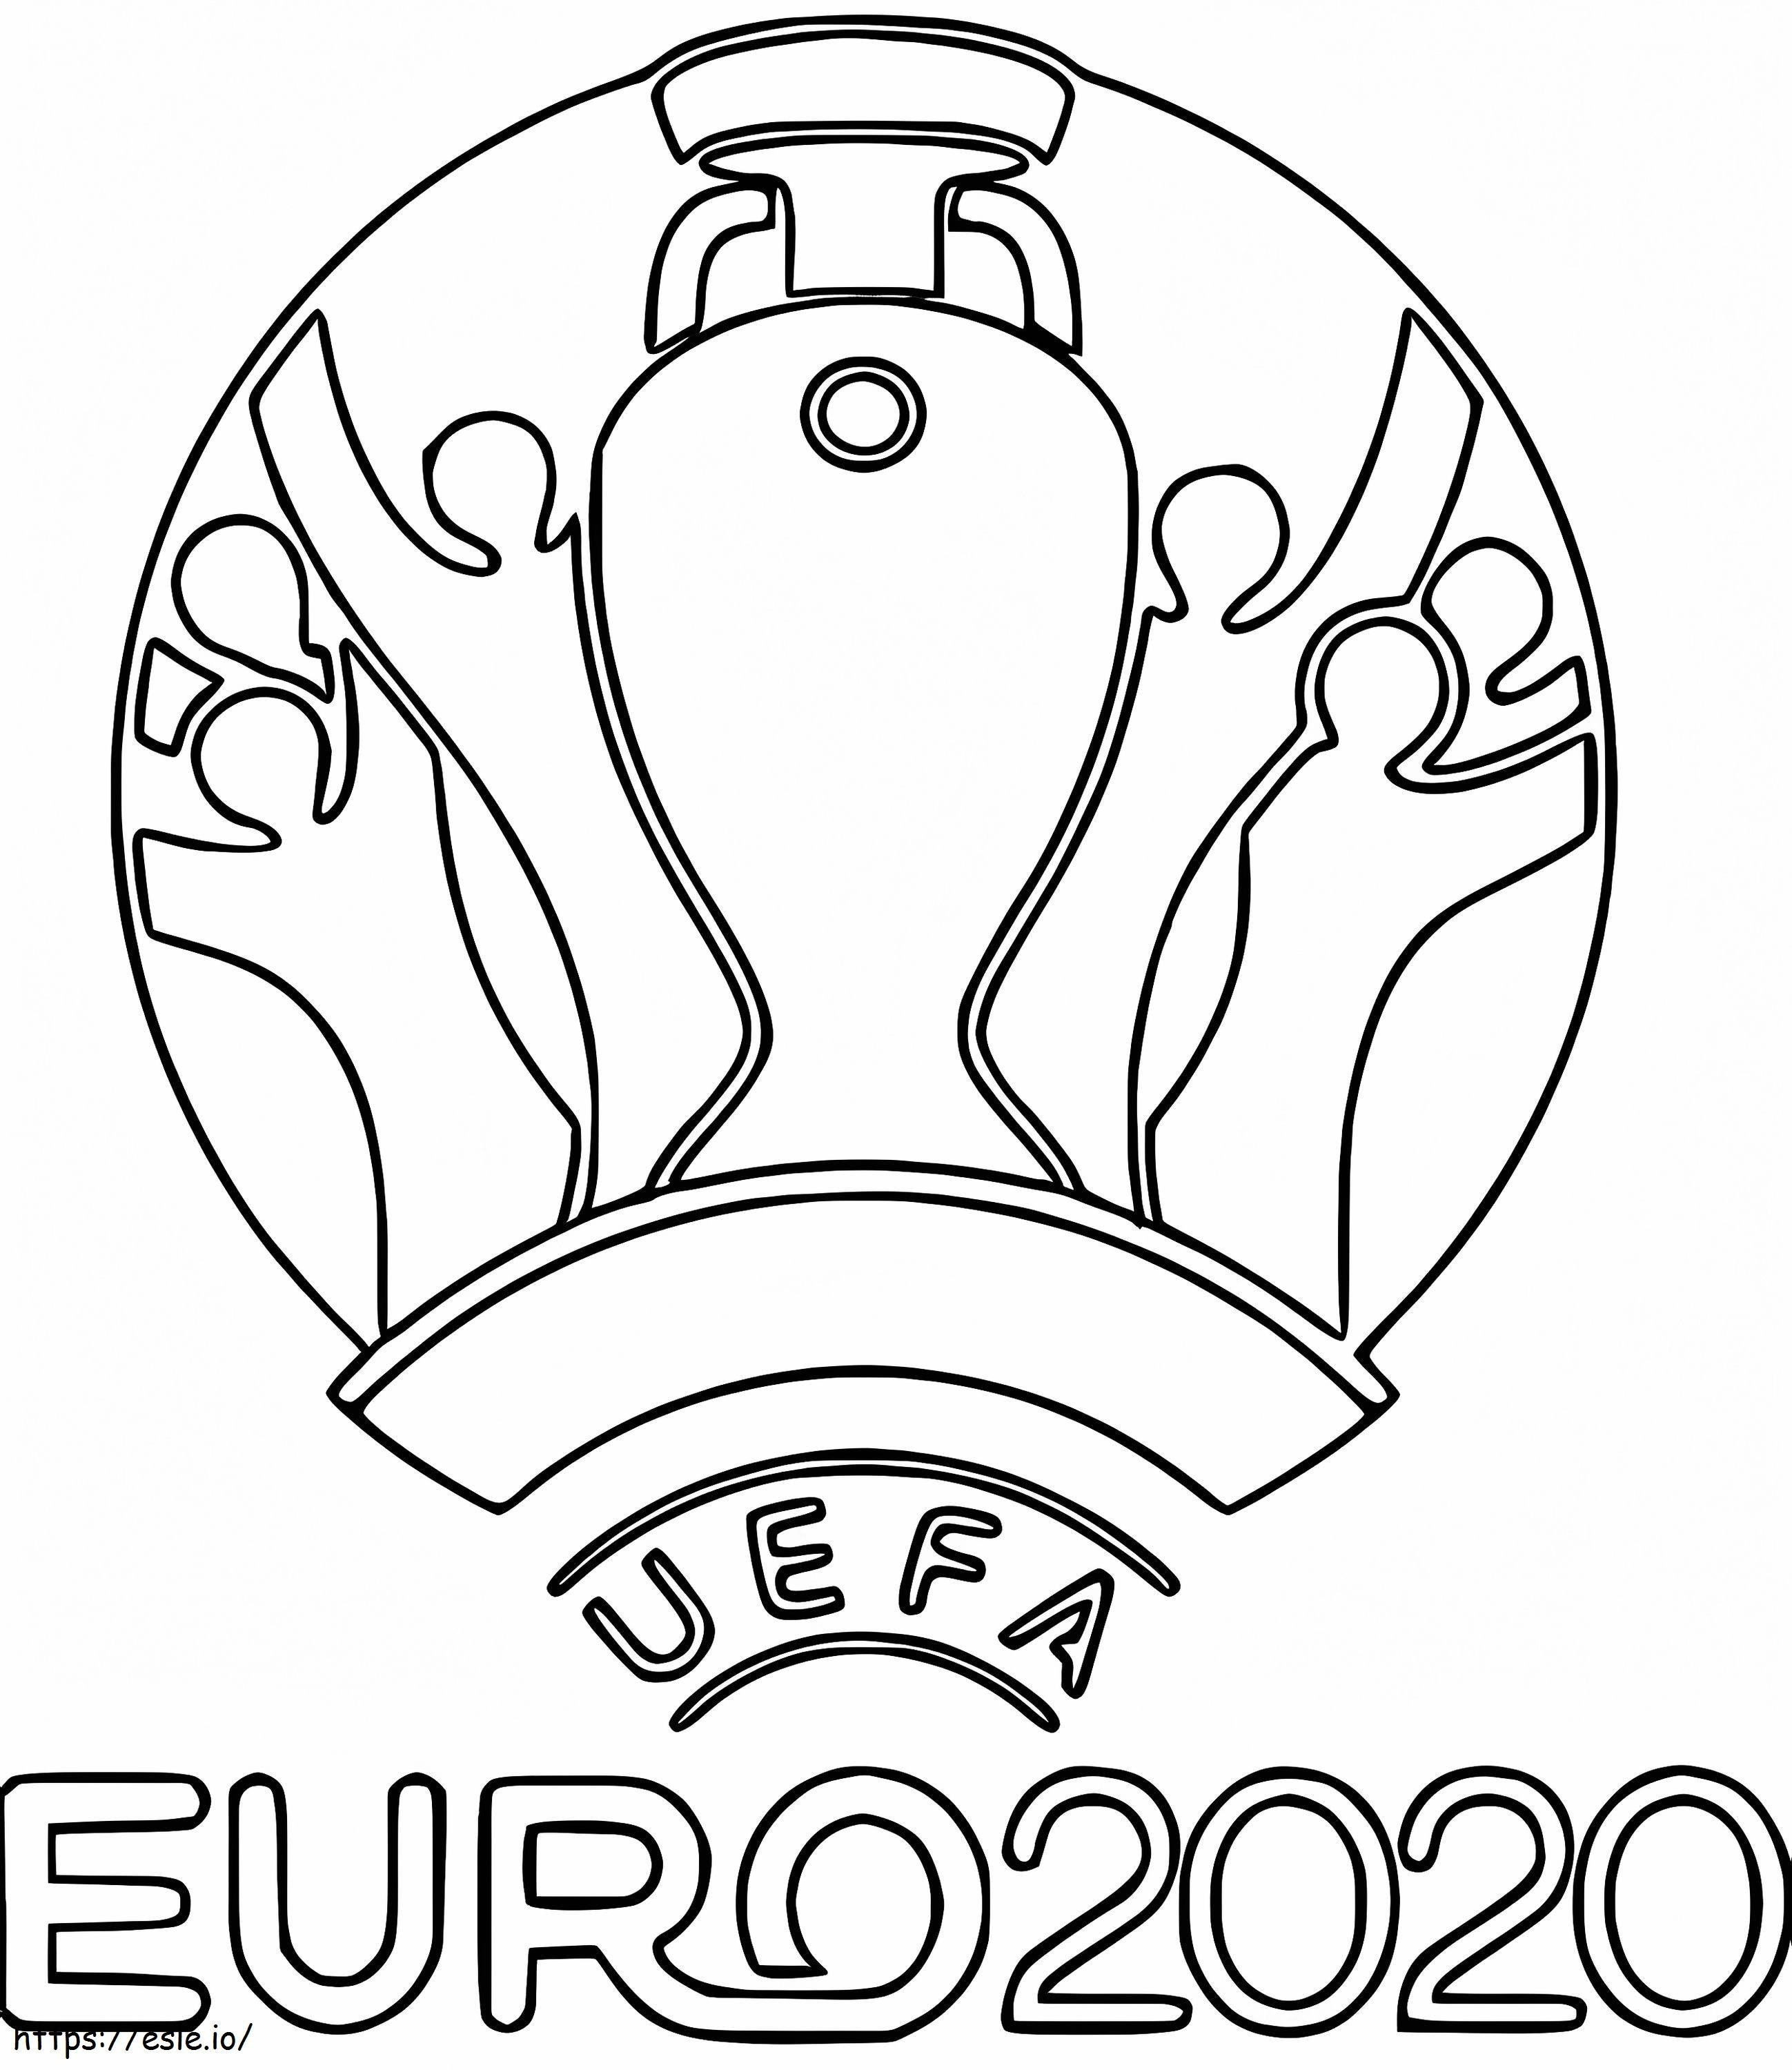 Euro 2020 2021 de colorat